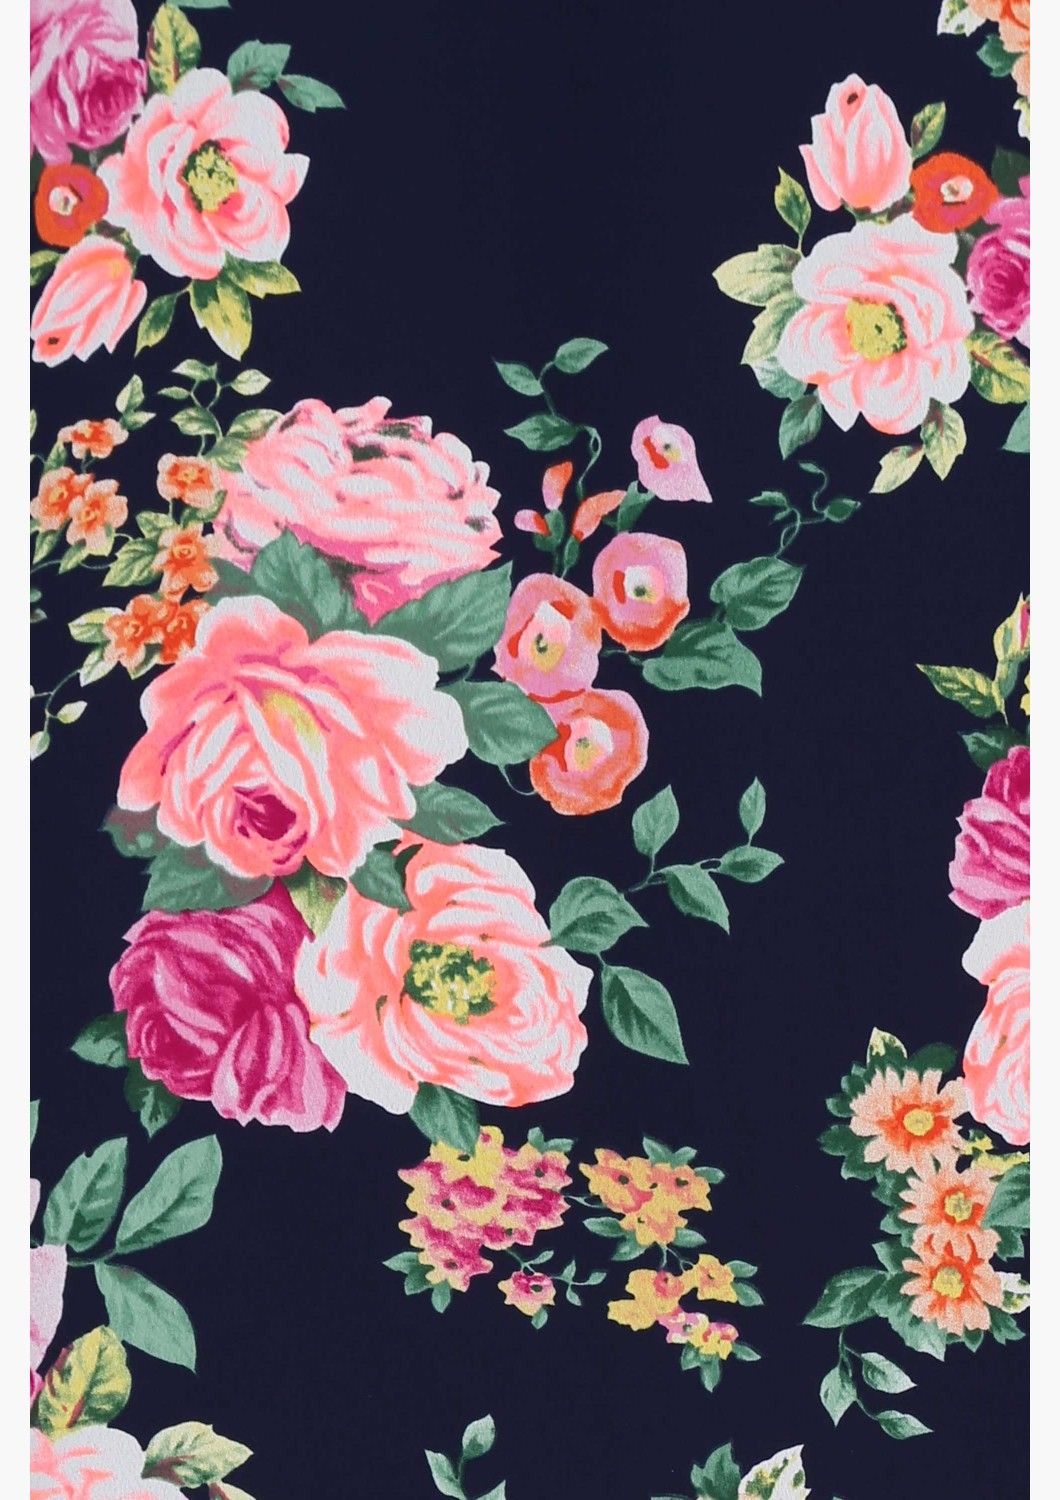 cute floral wallpaper,pink,black,flower,rose,pattern